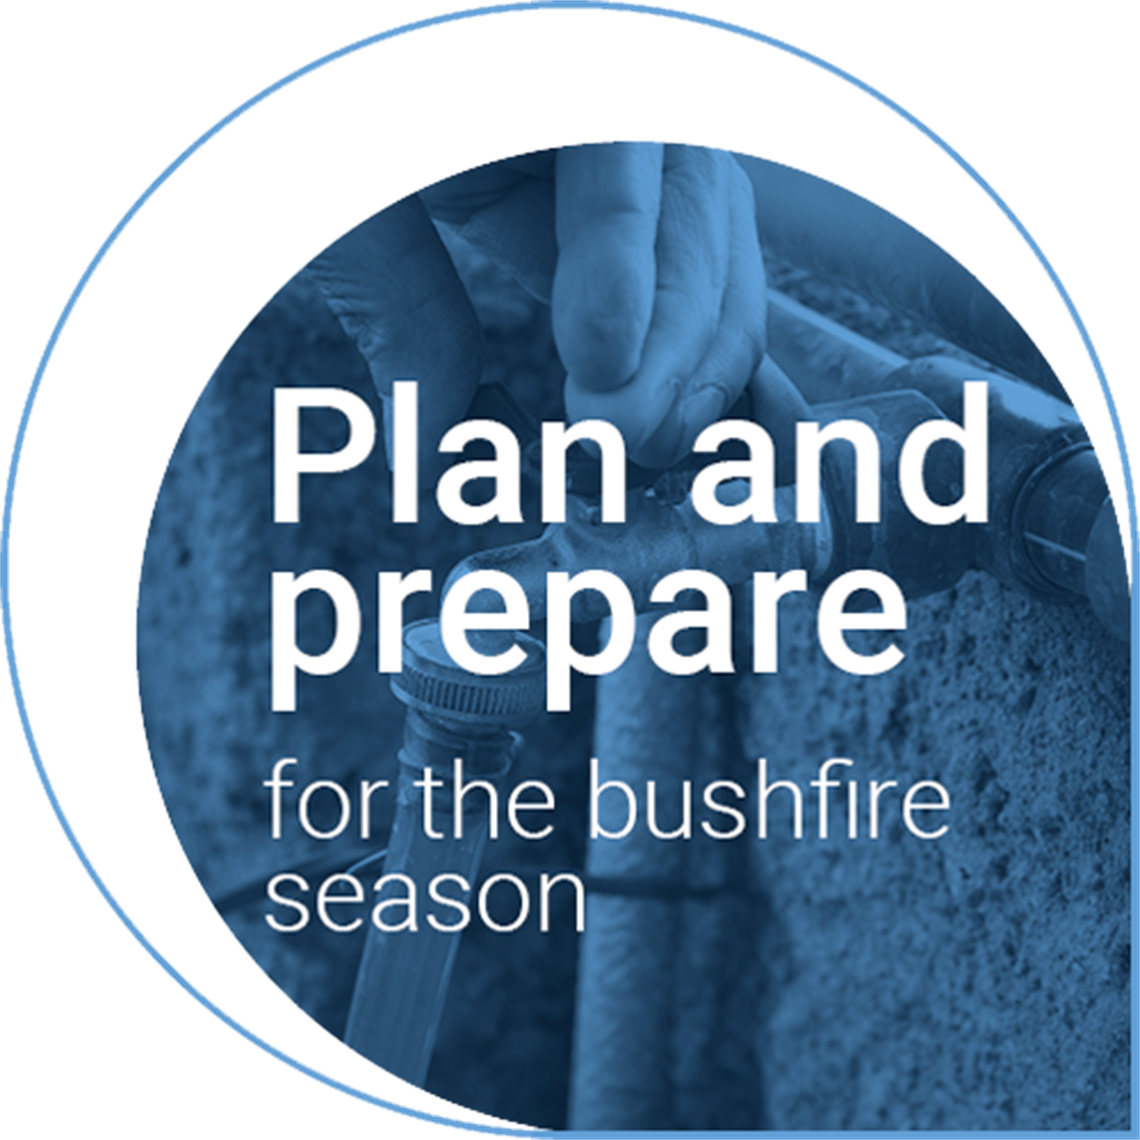 notification to plan and prepare for the bushfire season